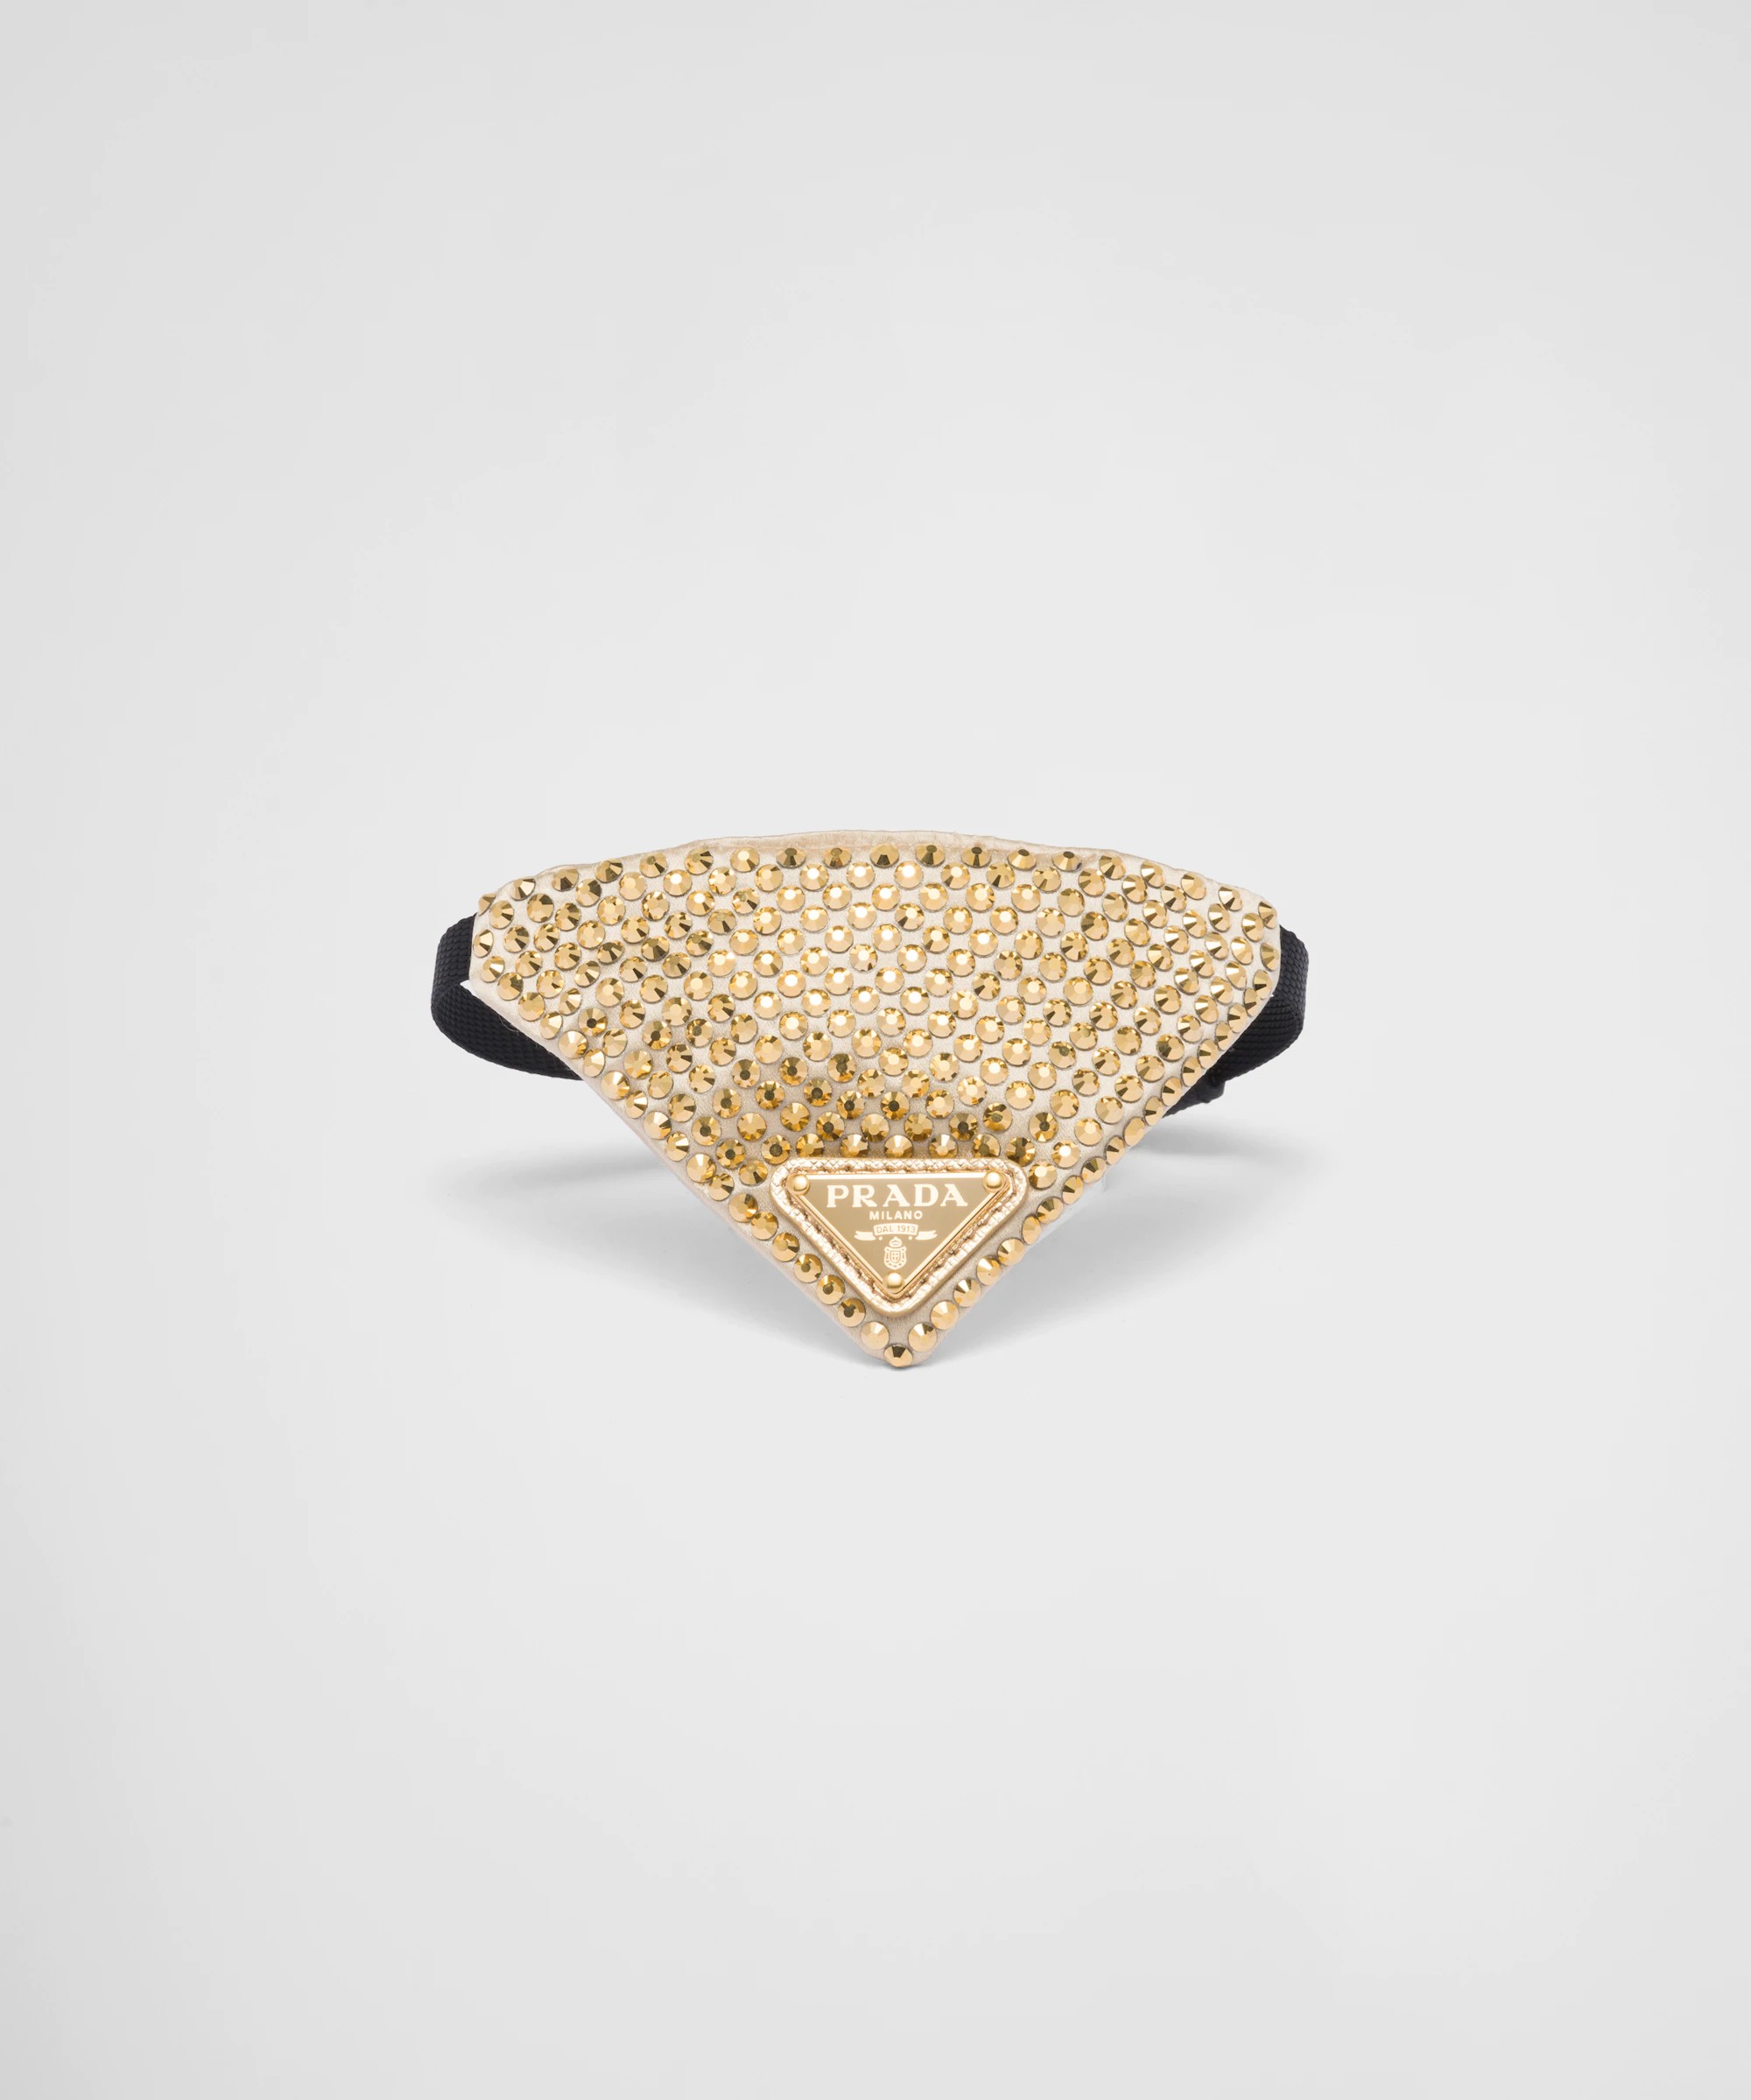 A gold crystal Prada pet bandana attached to a black collar.